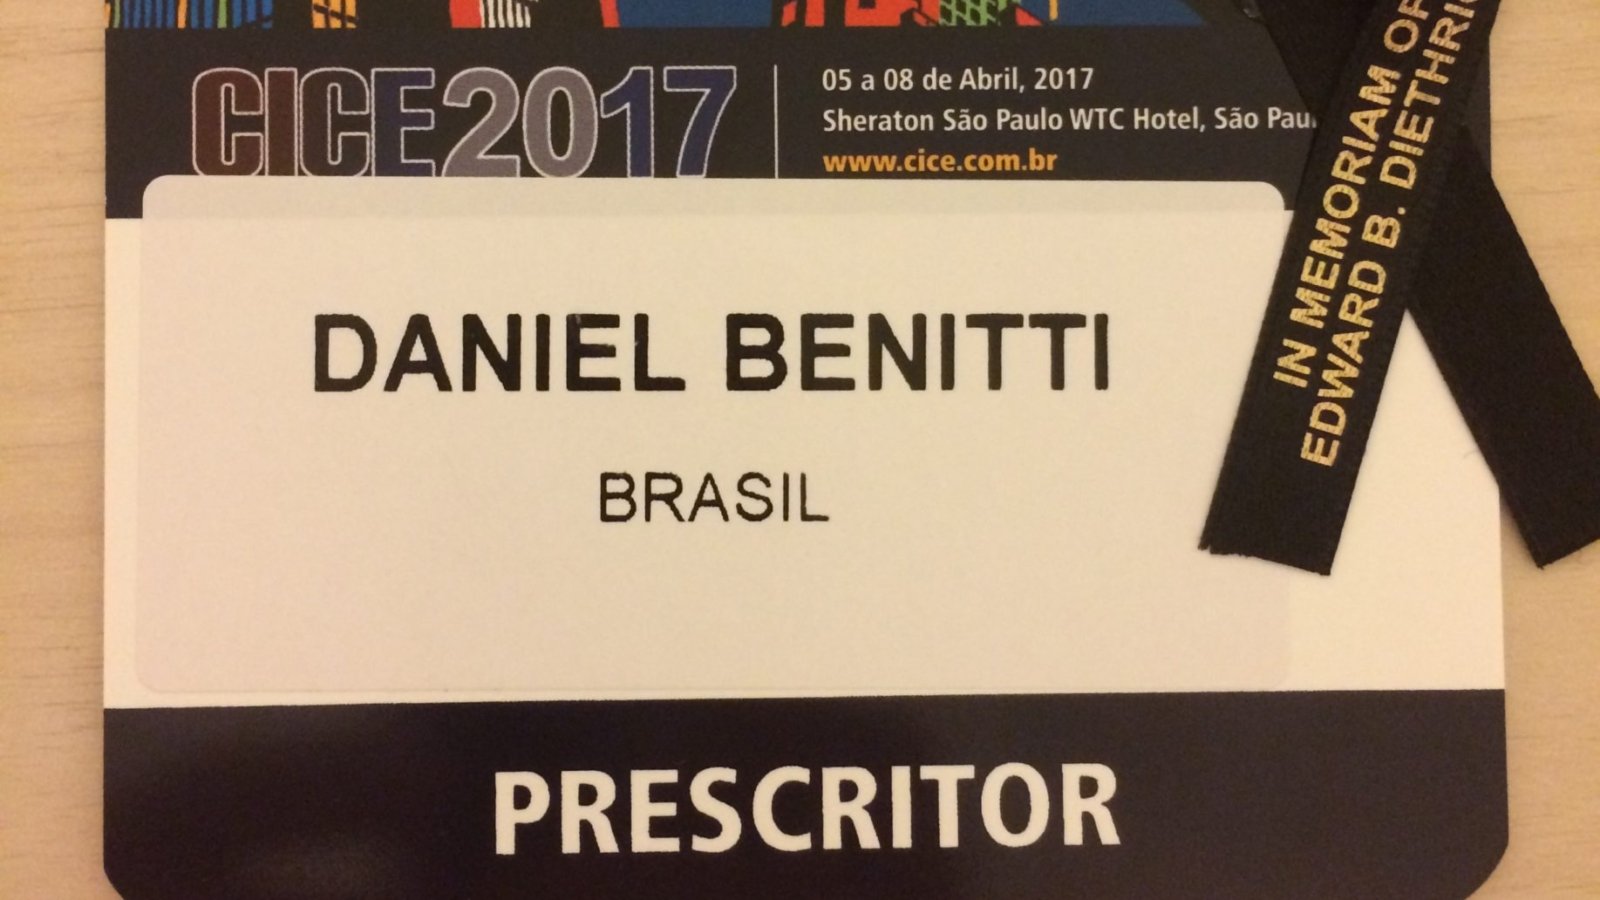 cirurgiao-vascular-dr-daniel-benitti-CICE-2017